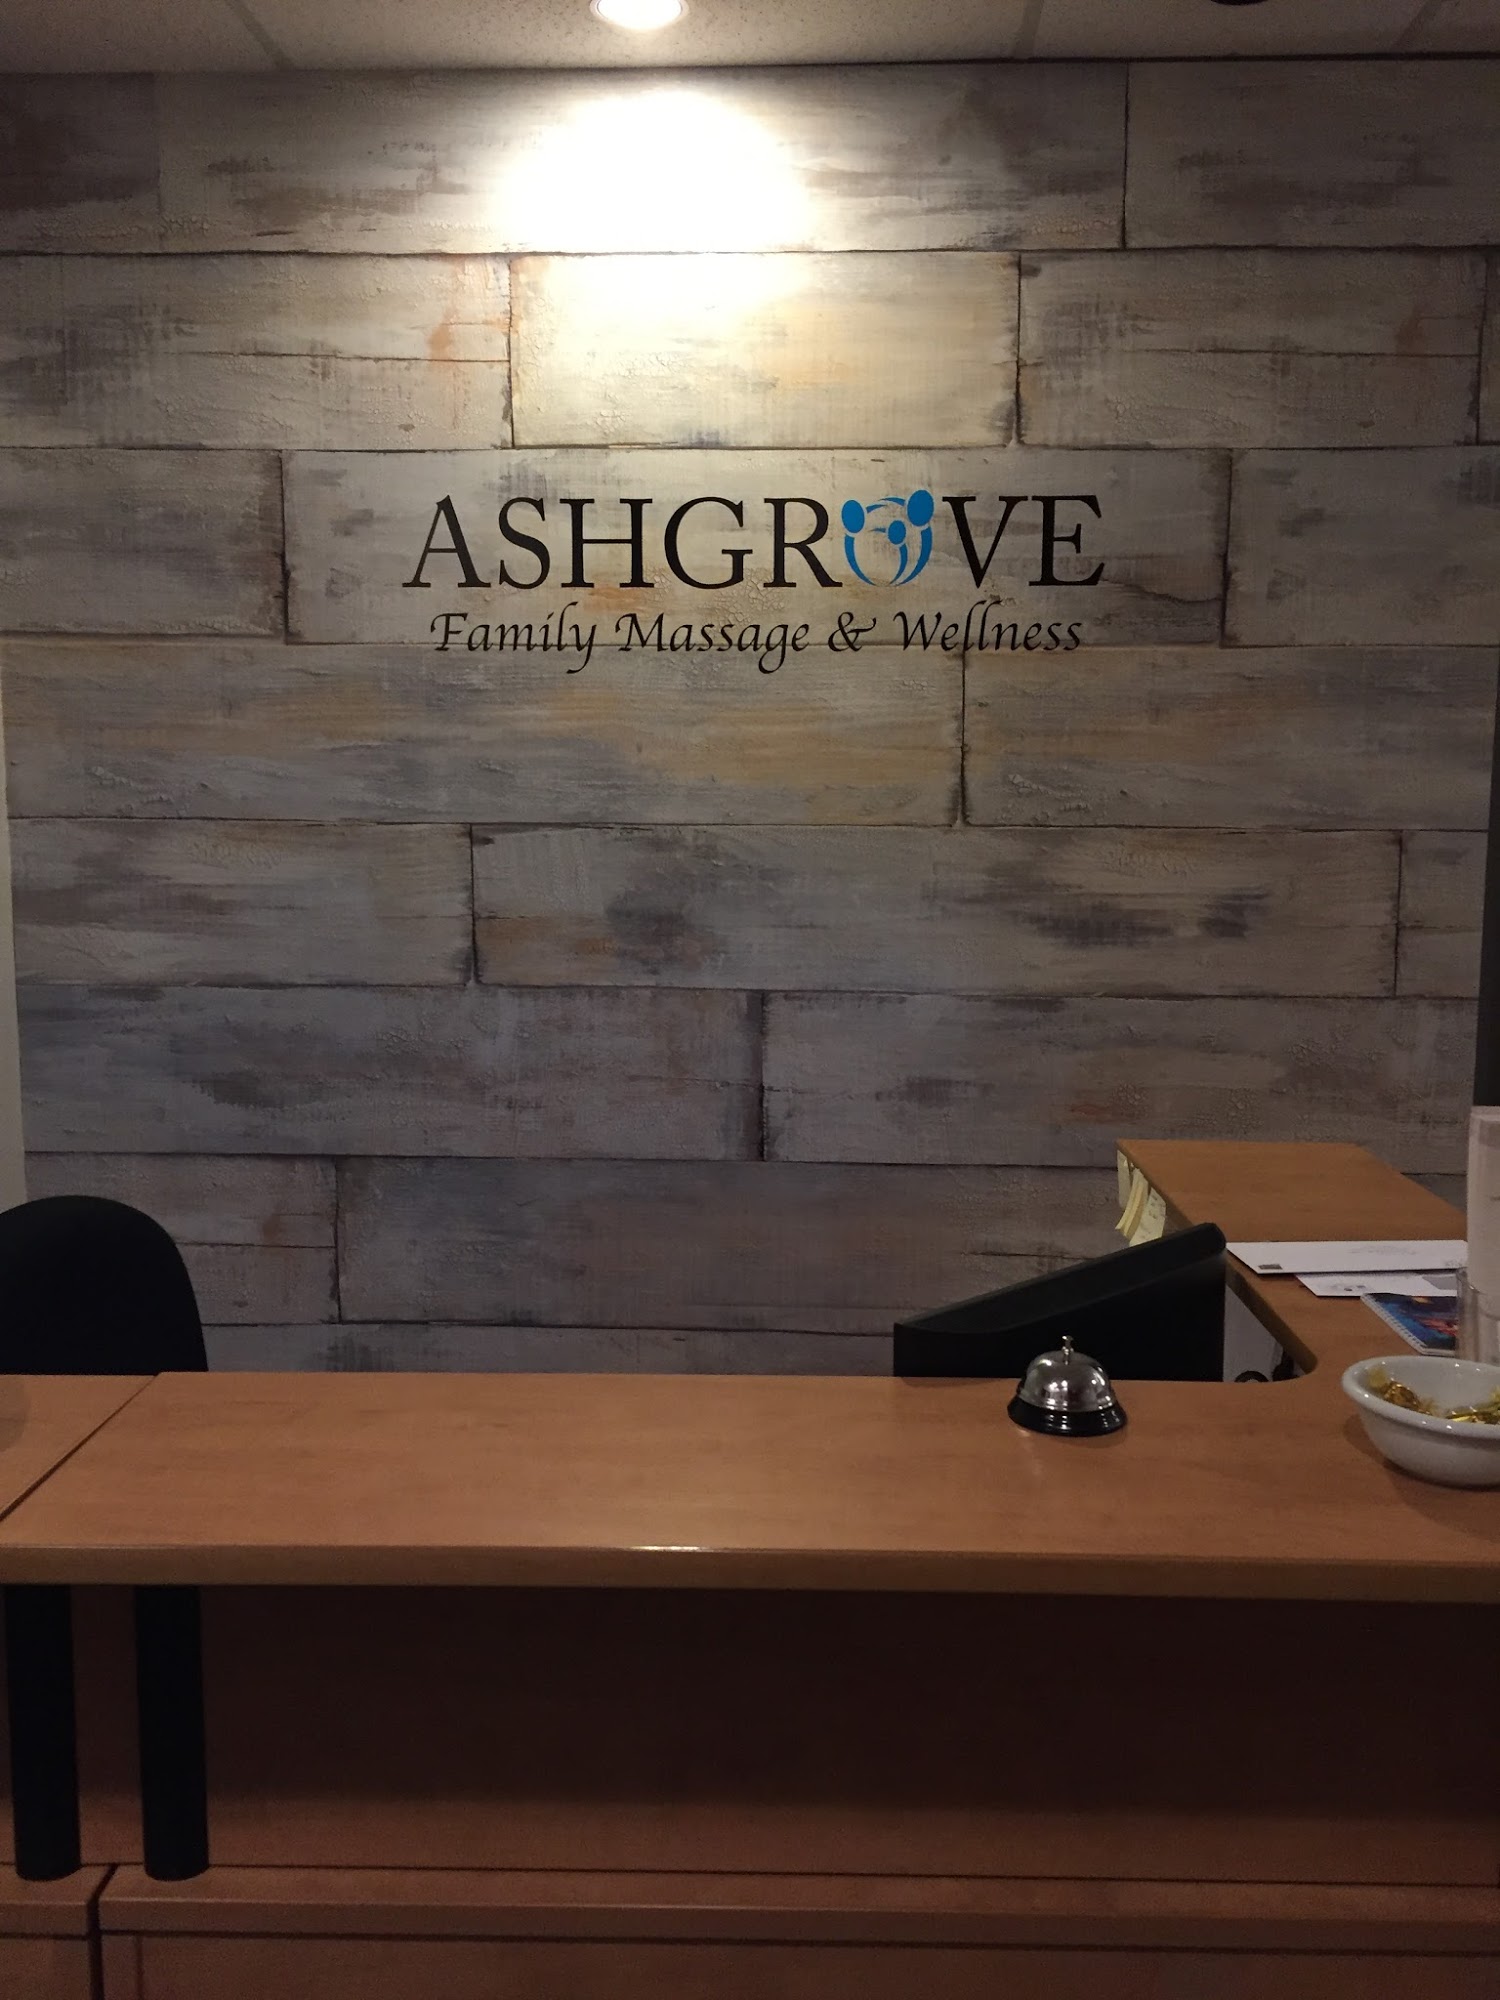 Ashgrove Family Massage & Wellness